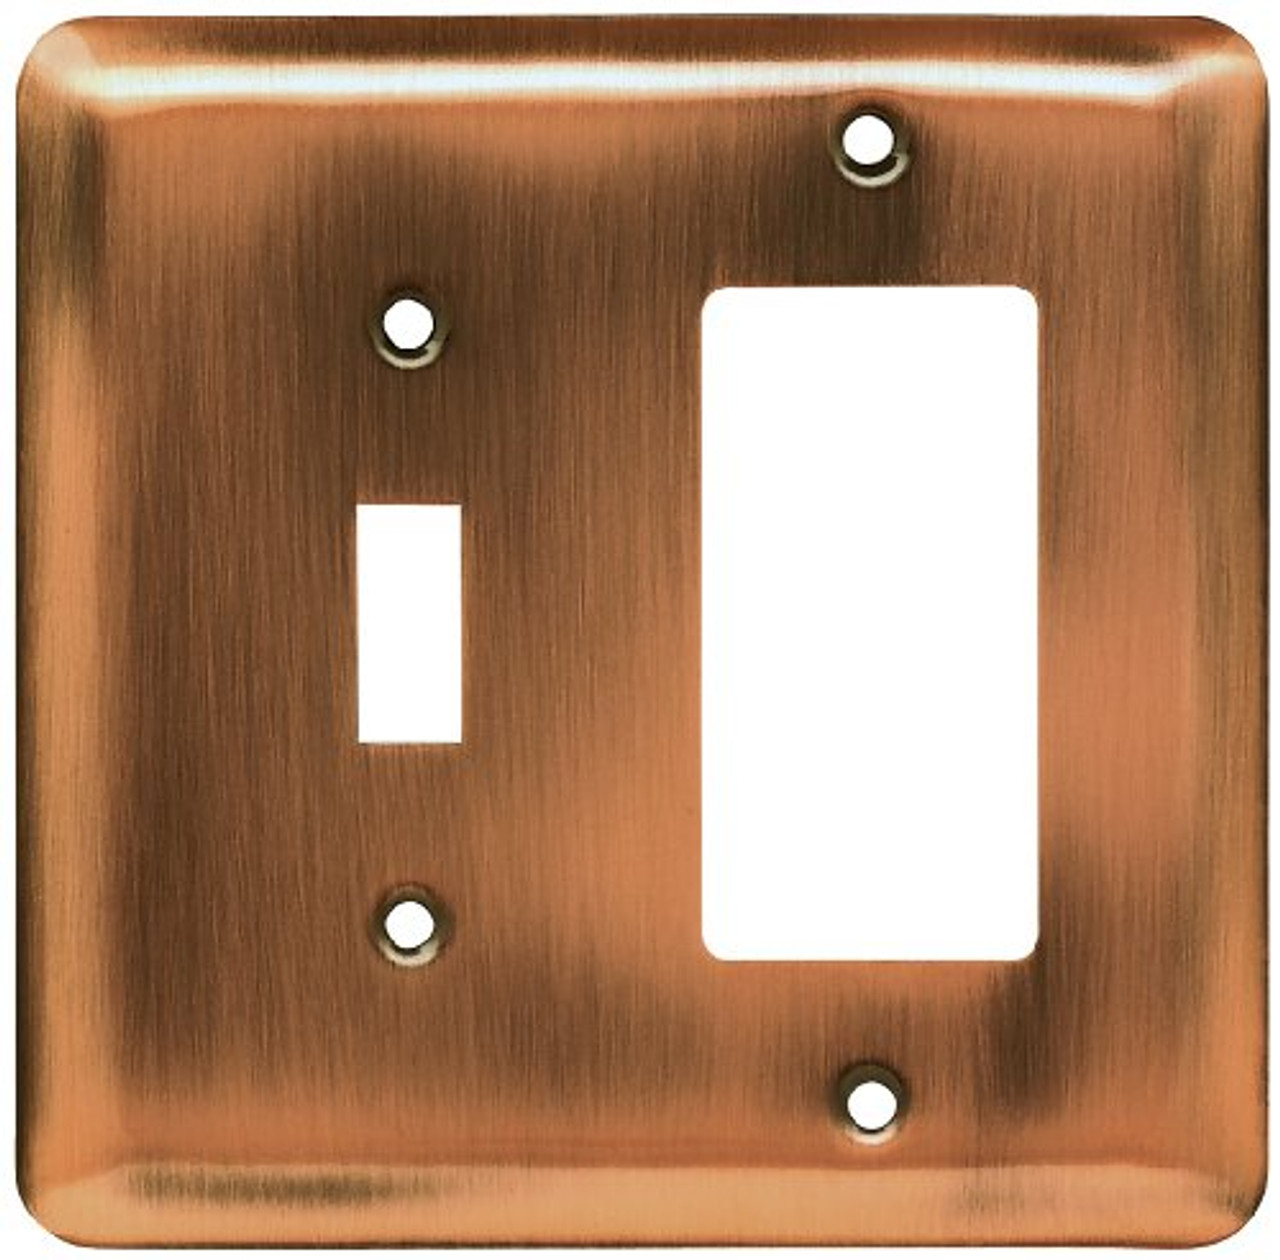 64366 Stamped Antique Copper Single Switch / GFCI Cover